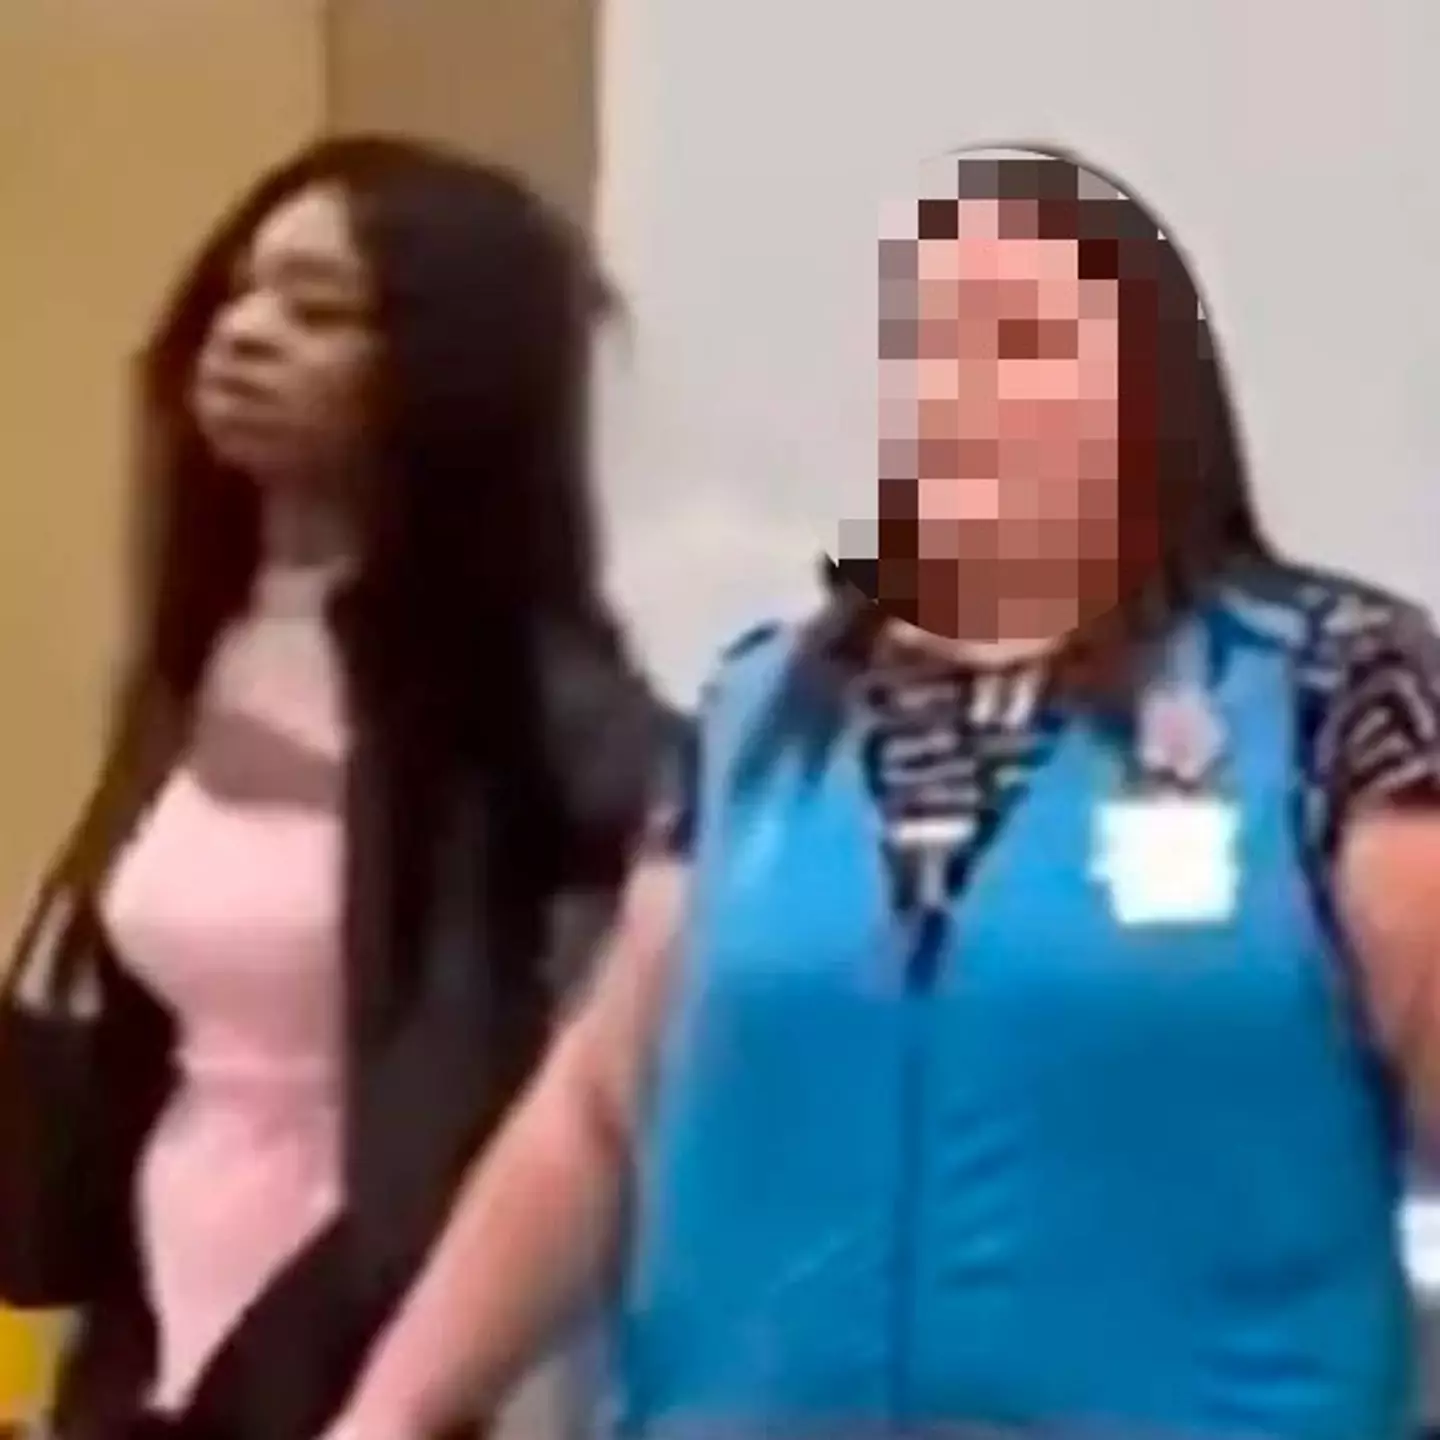 The woman held a Walmart employee hostage.